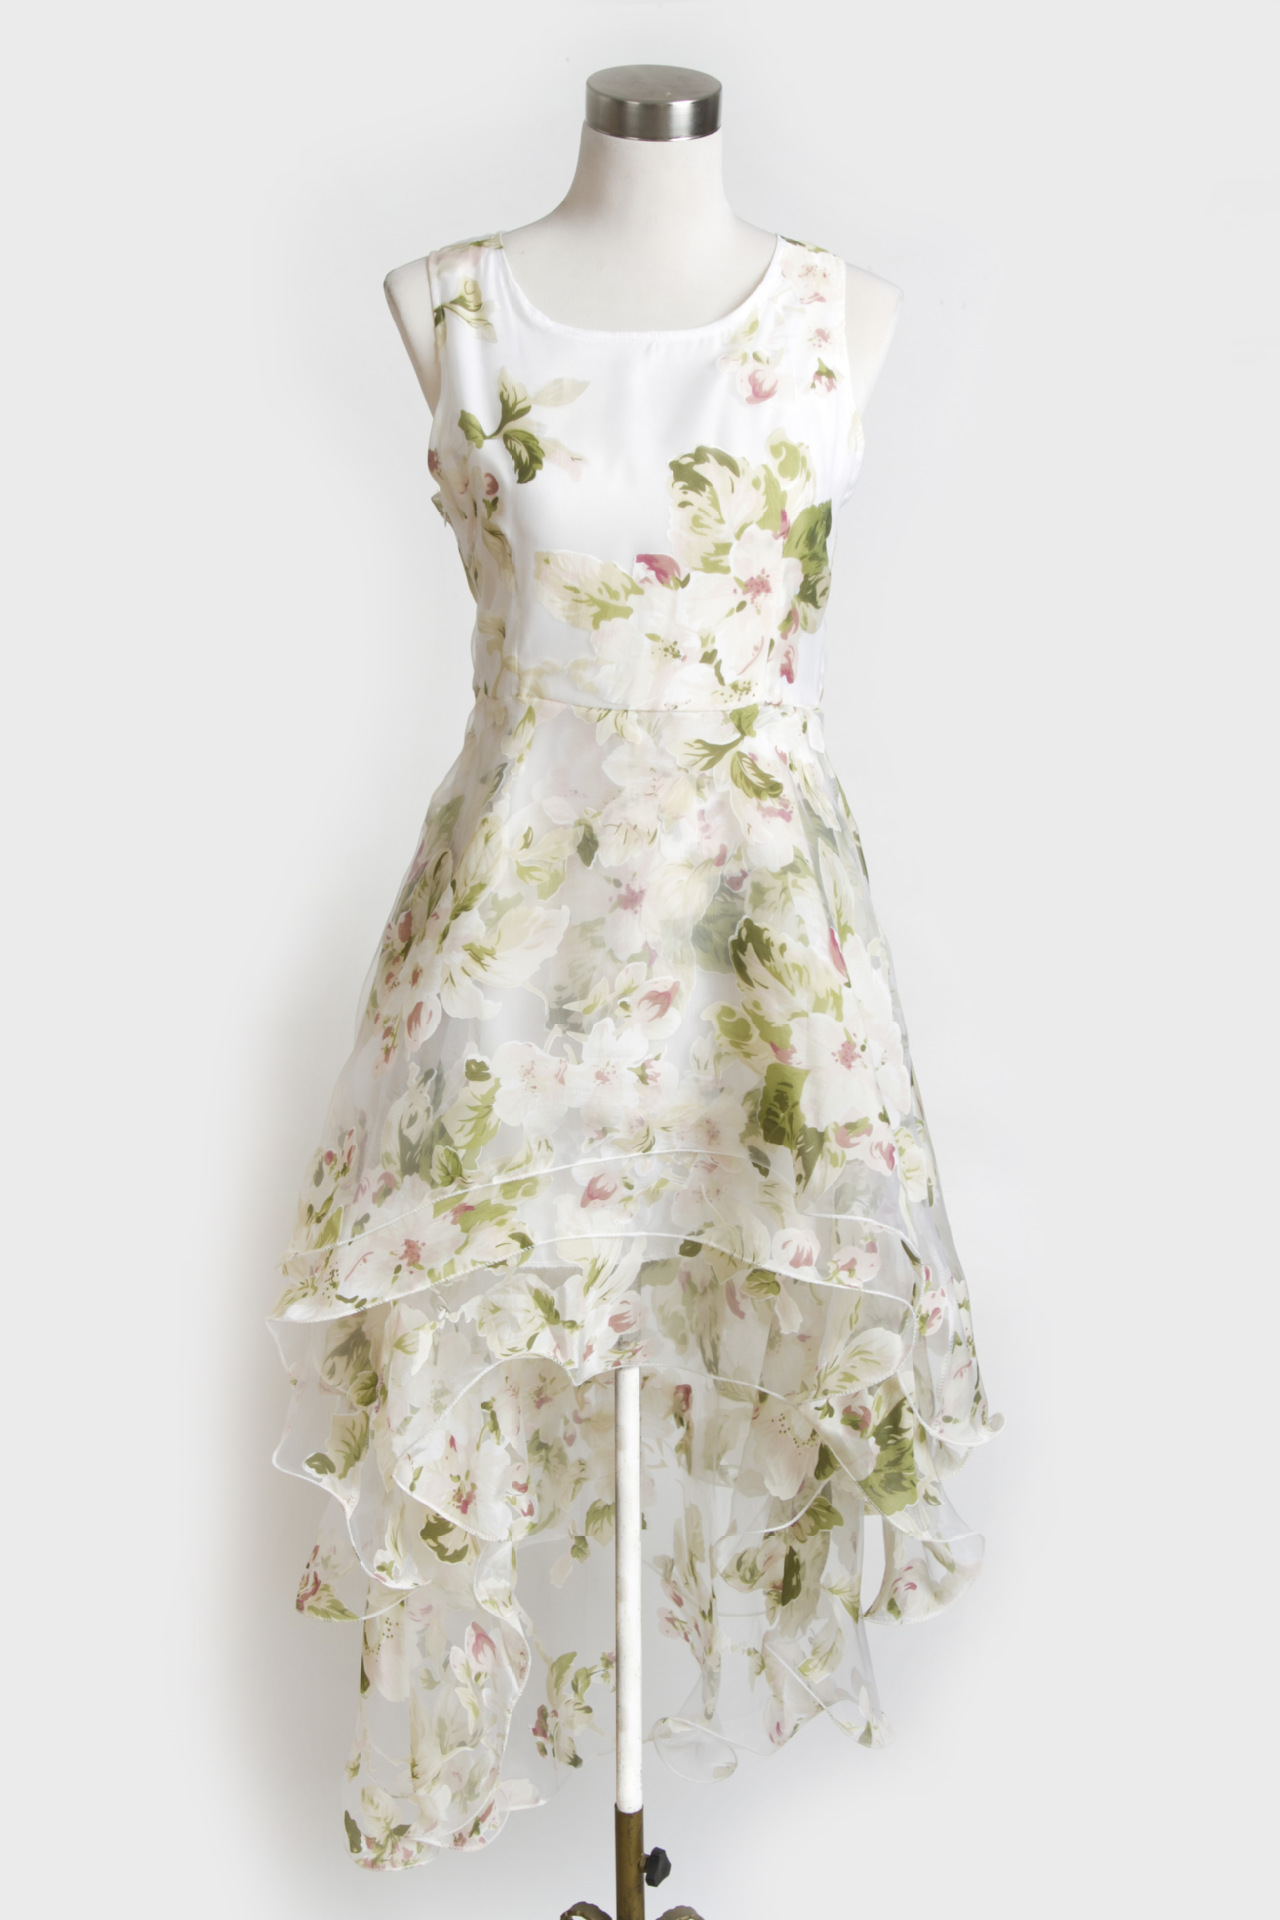 Fashion Irregular Lace And Organza Floral Printed Dress